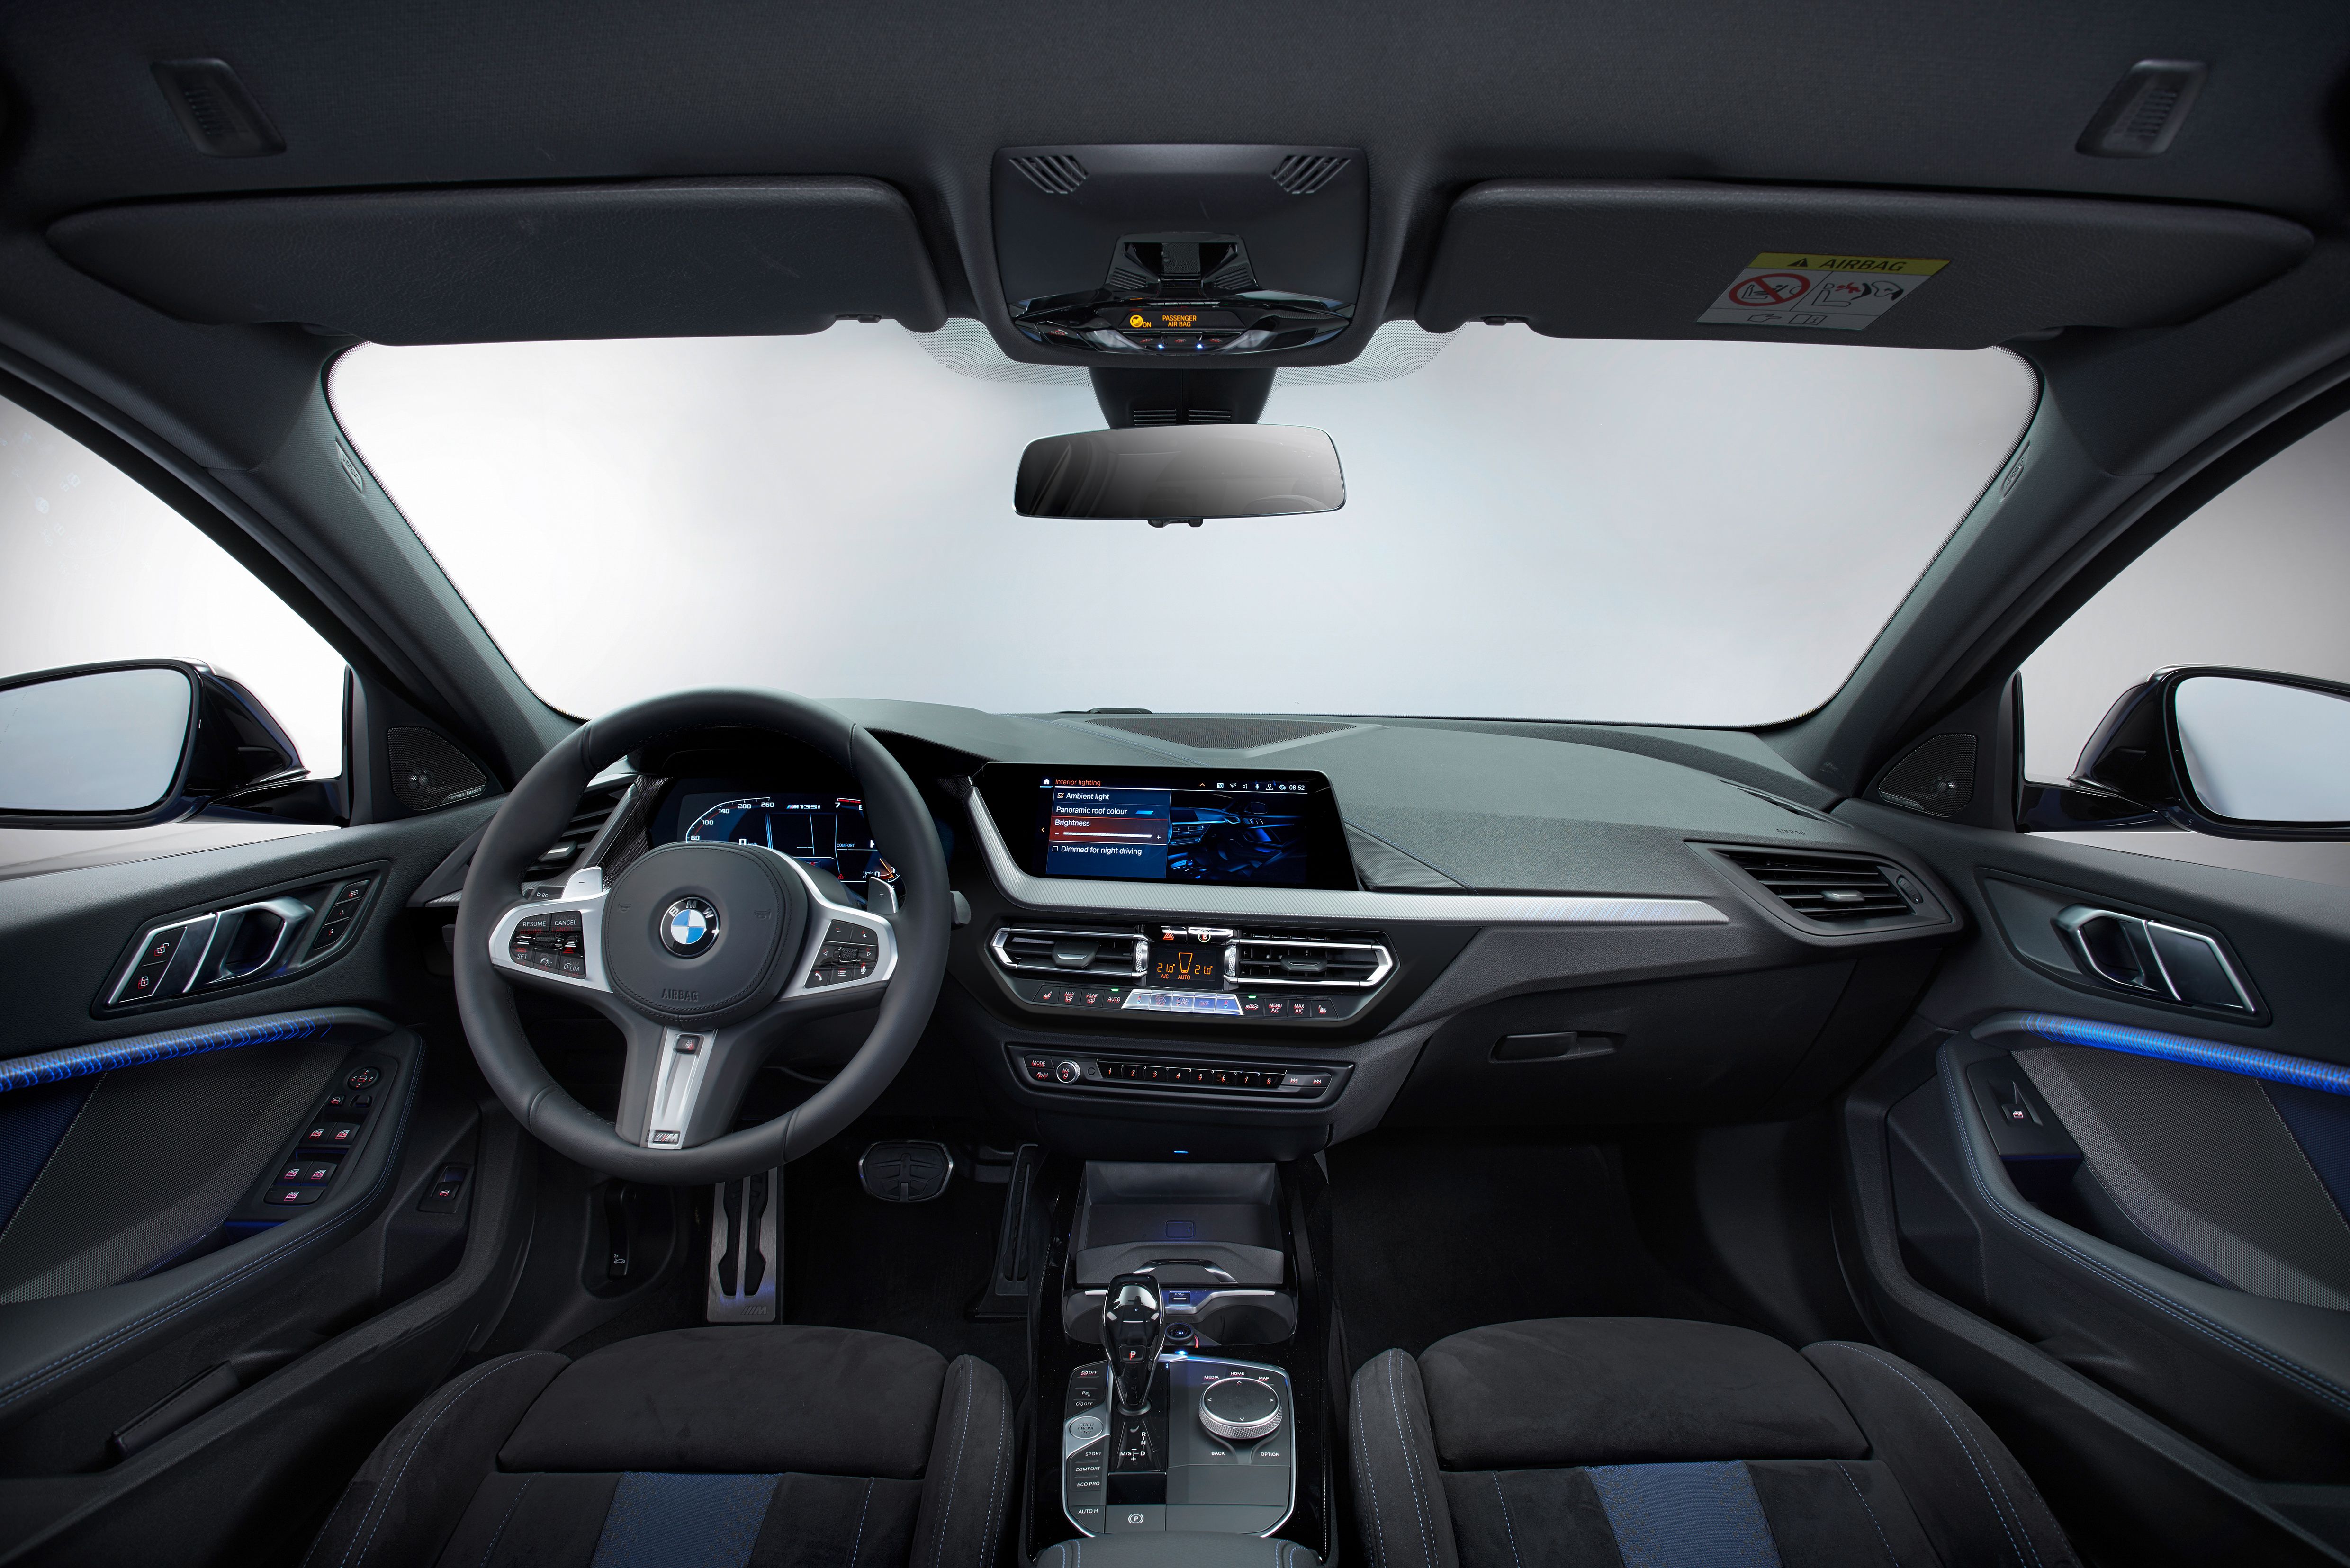 New BMW 1-Series Hatchback – Front-Wheel Drive